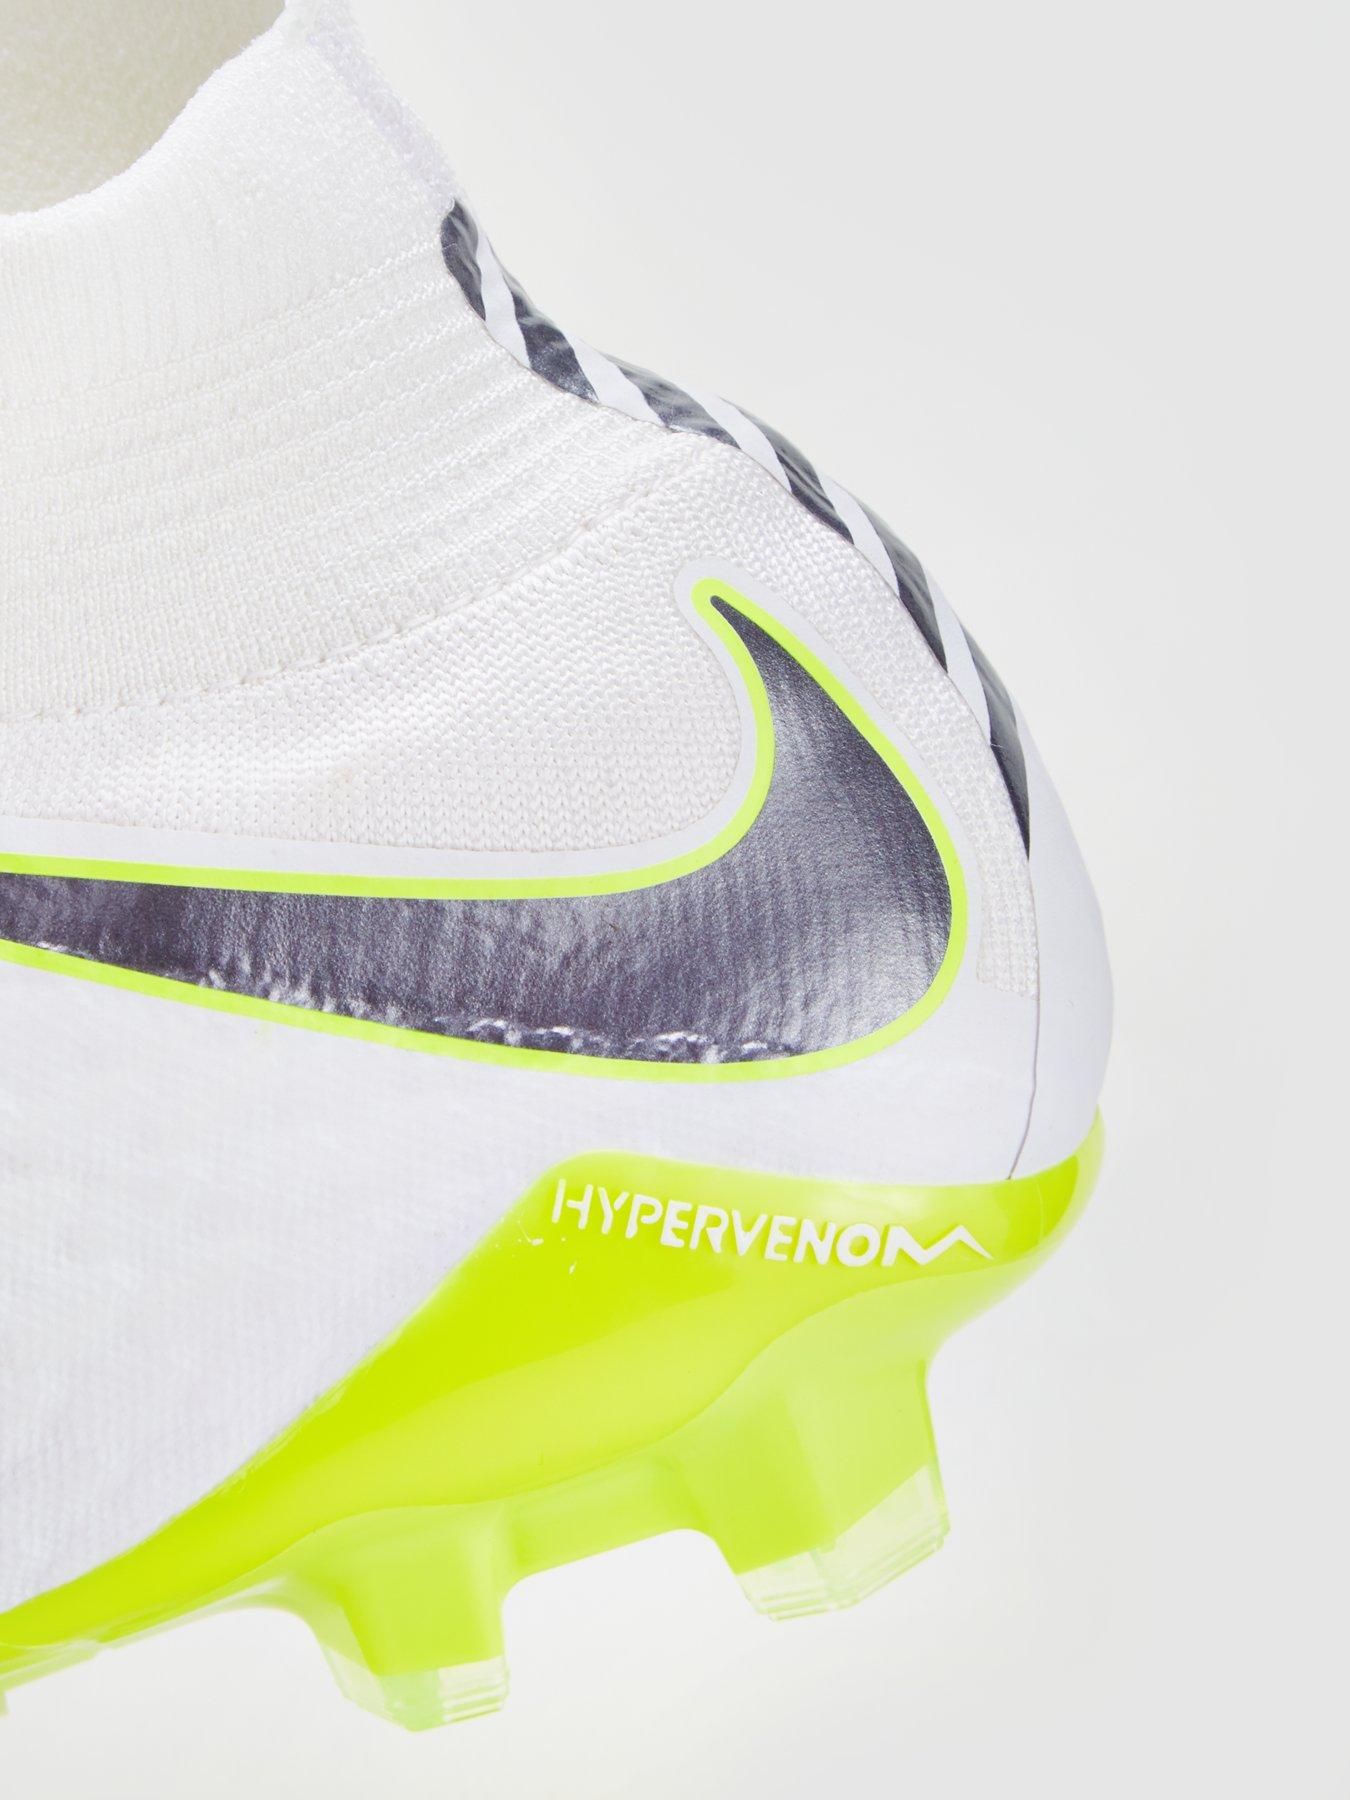 Nike Hypervenom 3 Df al miglior prezzo Trovaprezzi.it